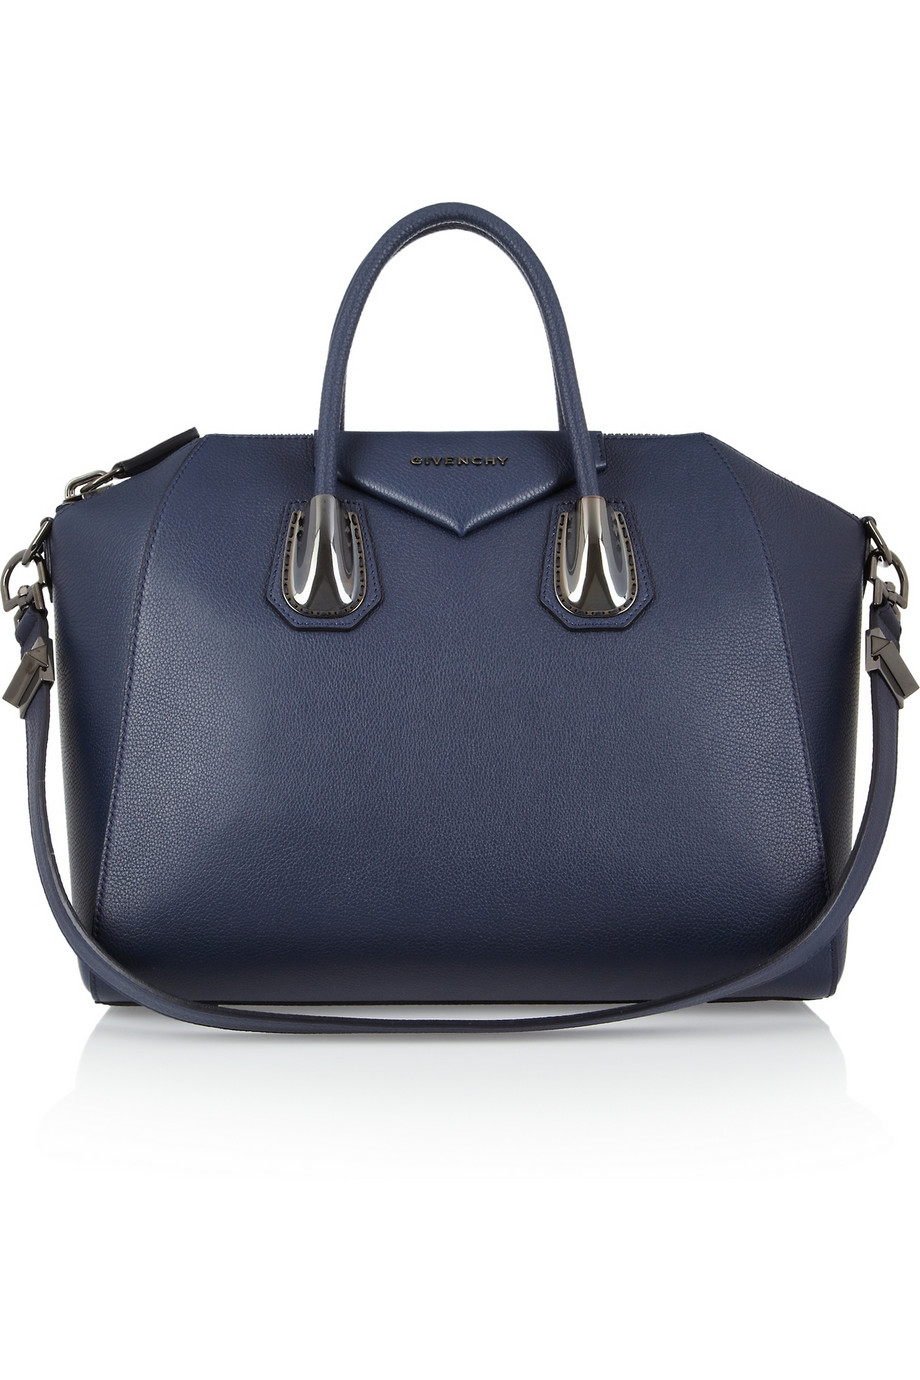 Givenchy Medium Antigona Bag in Navy Leather in Blue | Lyst